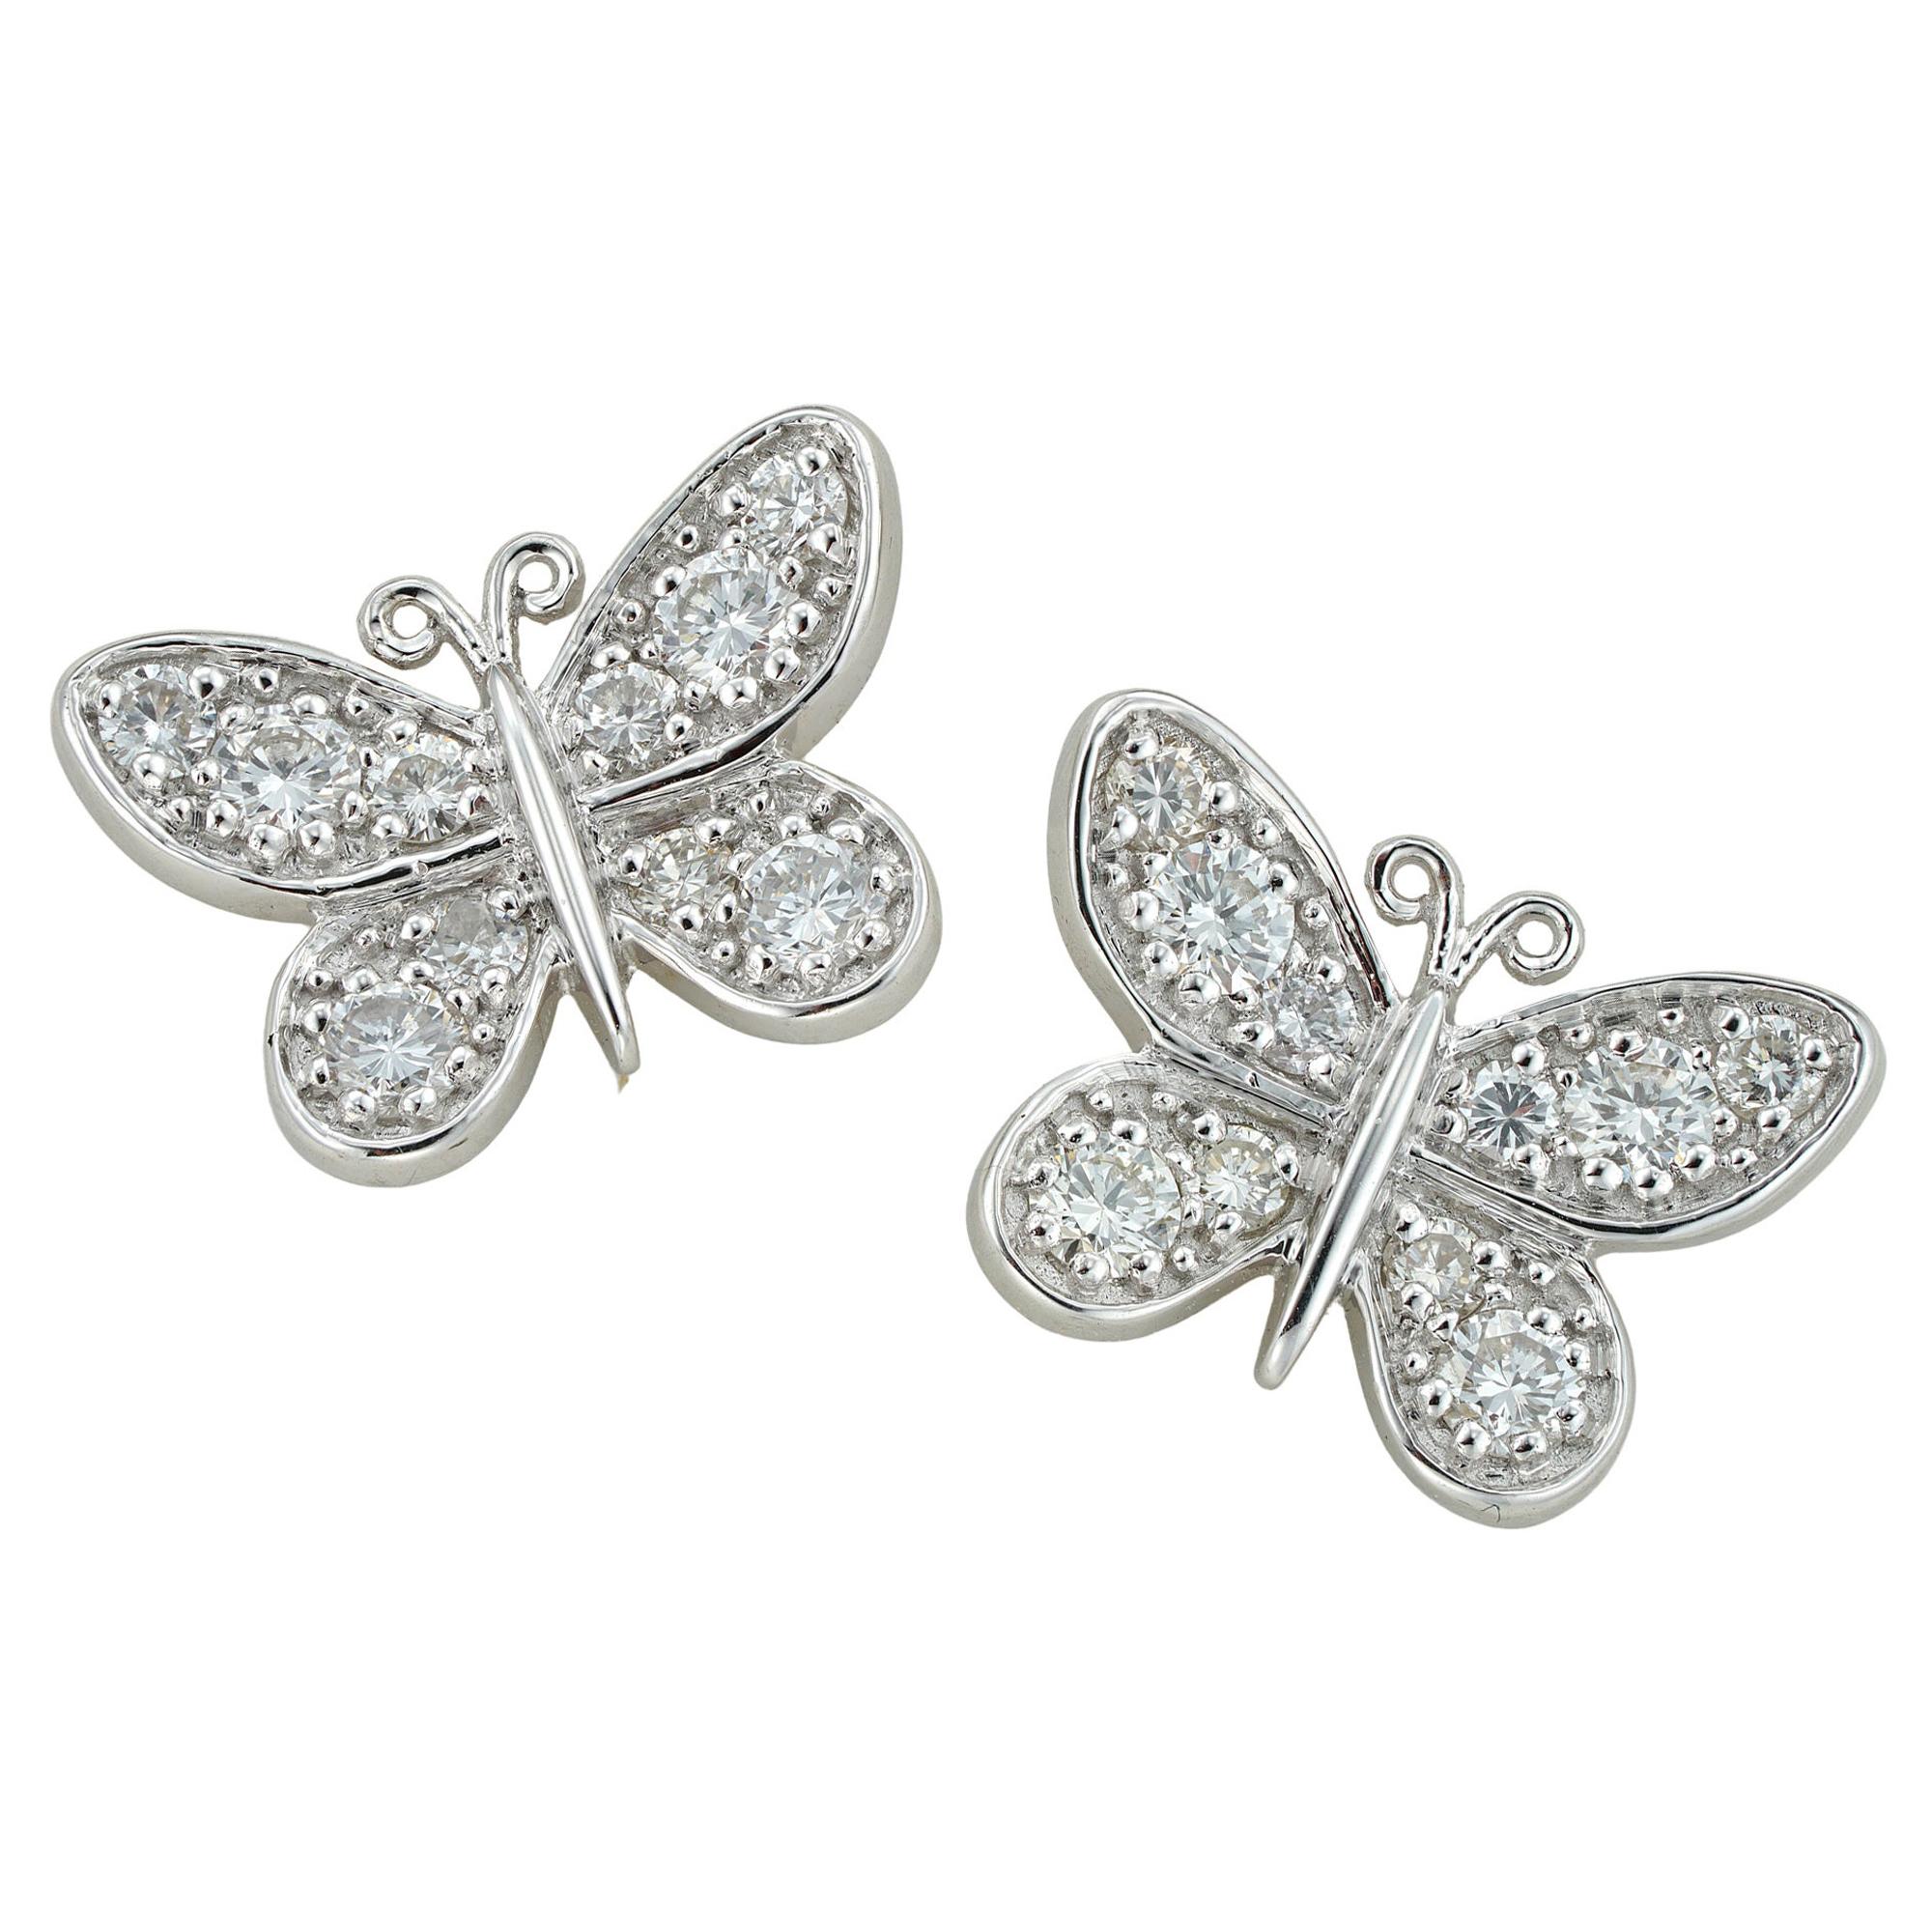 Pair of Diamond-Set Big Butterfly Earrings